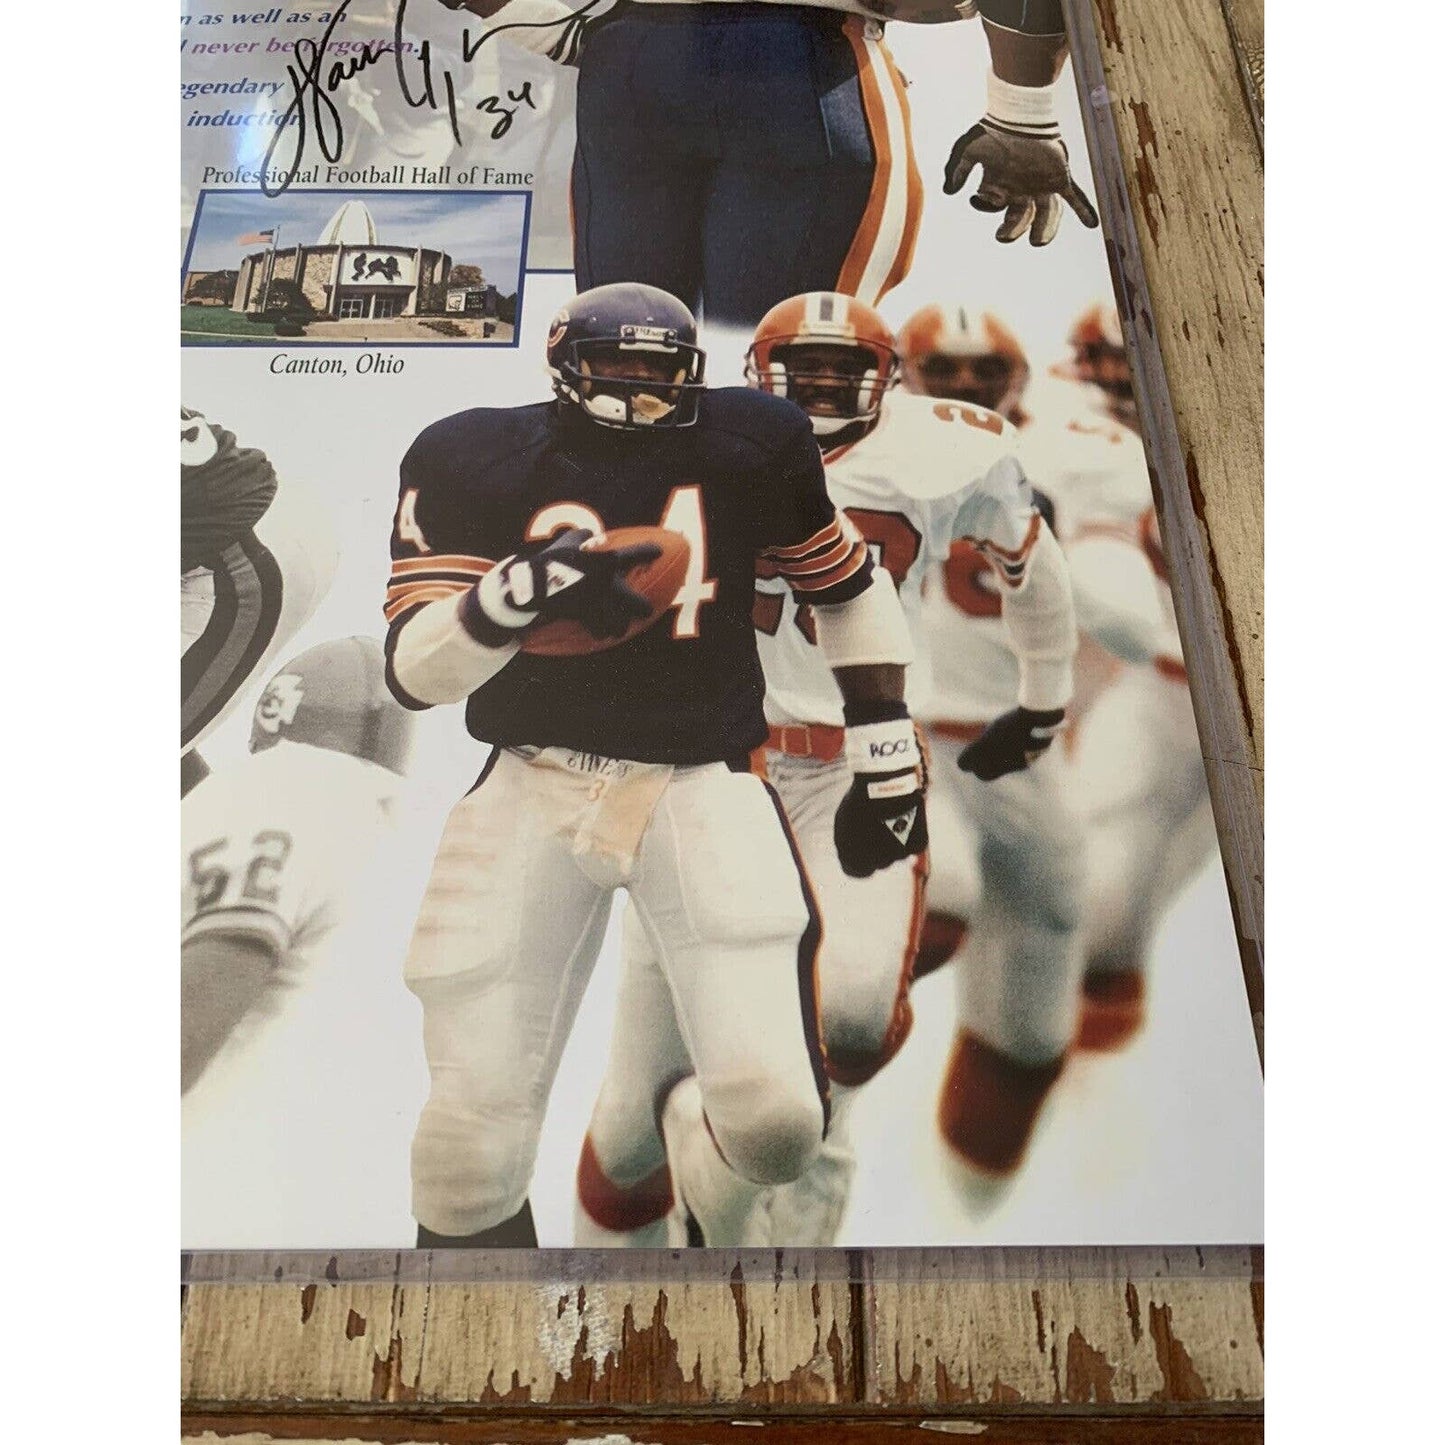 Walter Payton Autographed/Signed 16x20 Photo Chicago Bears HOF - TreasuresEvolved